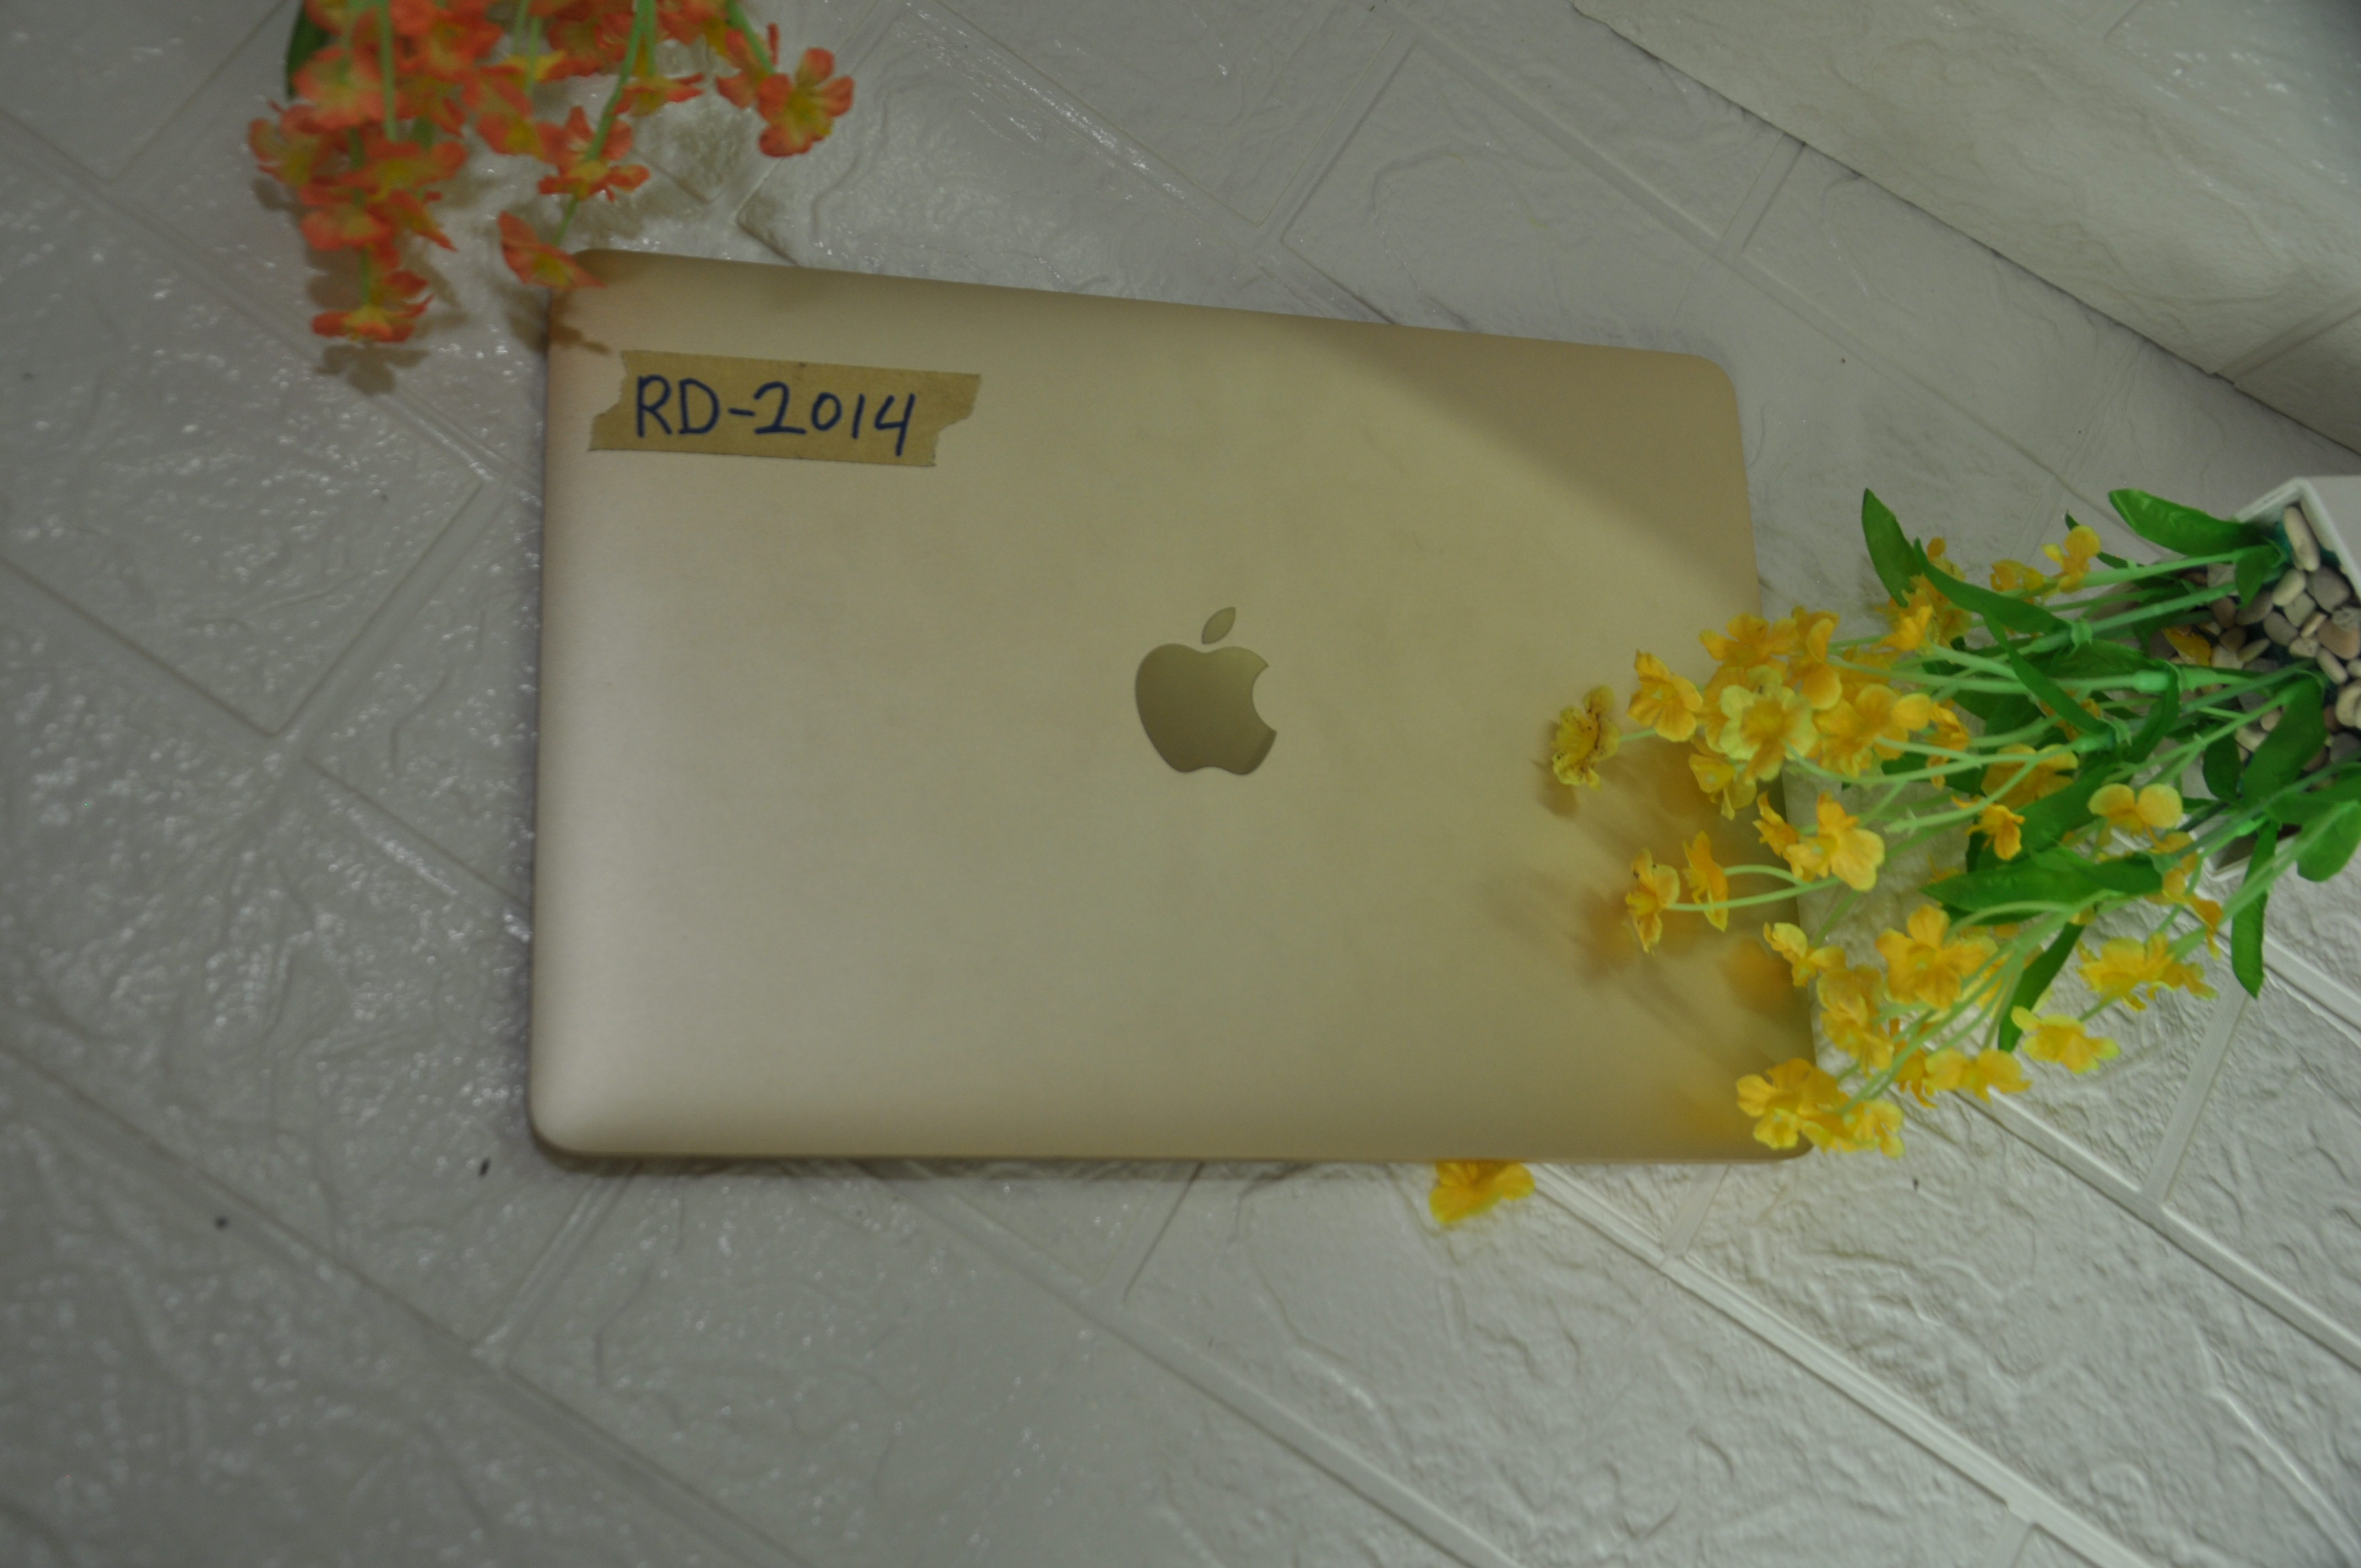 MacBook (Retina, 12-inch, Early 2015)